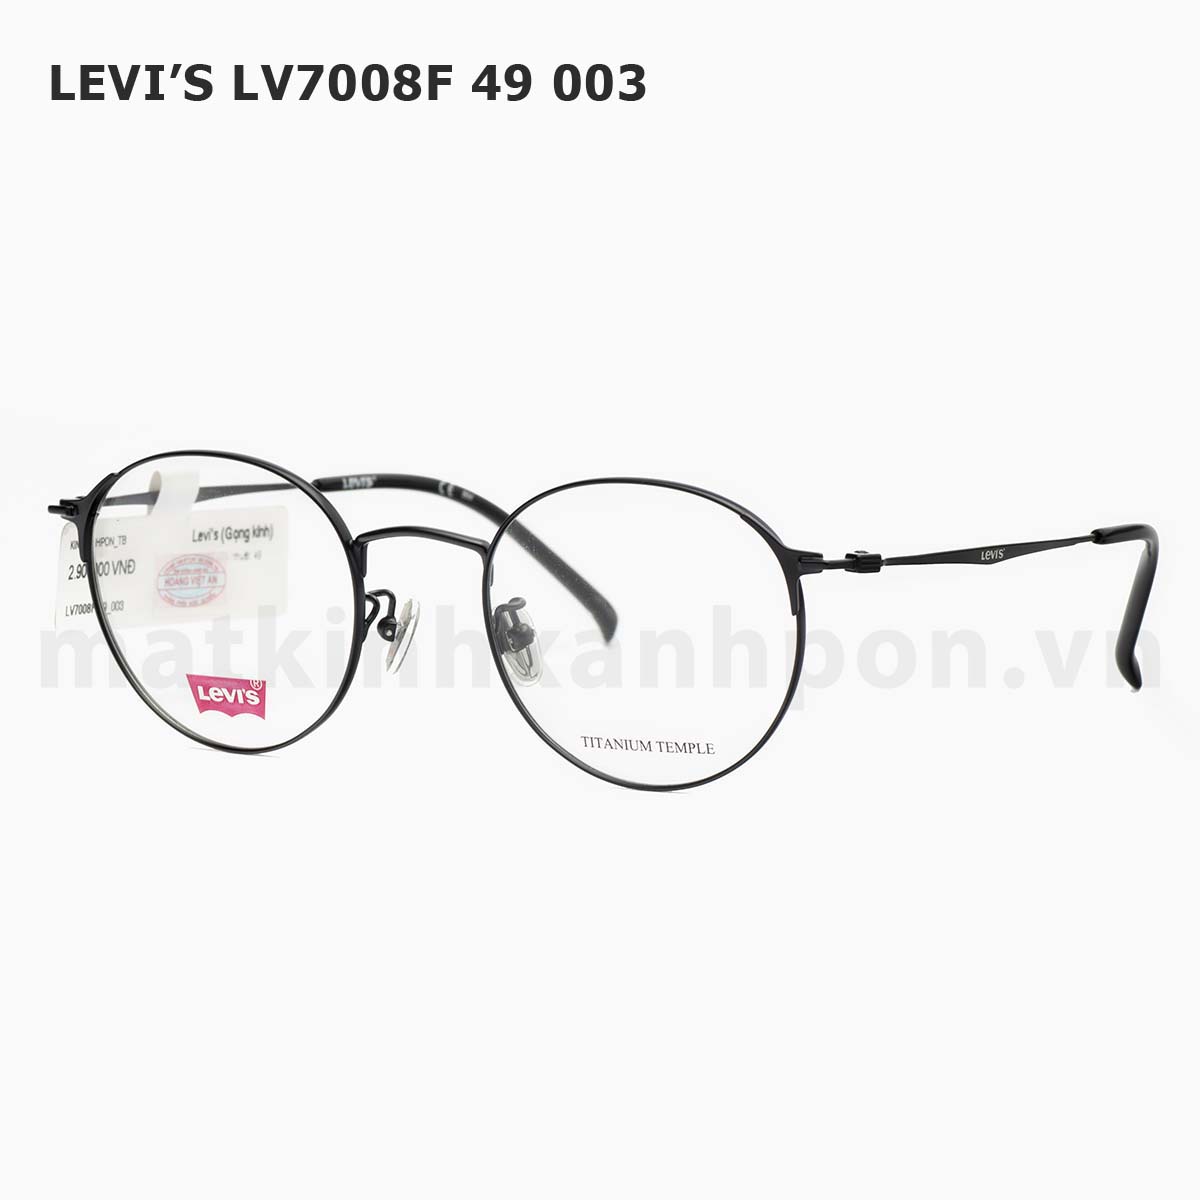 Levi’s LV7008F 49 003